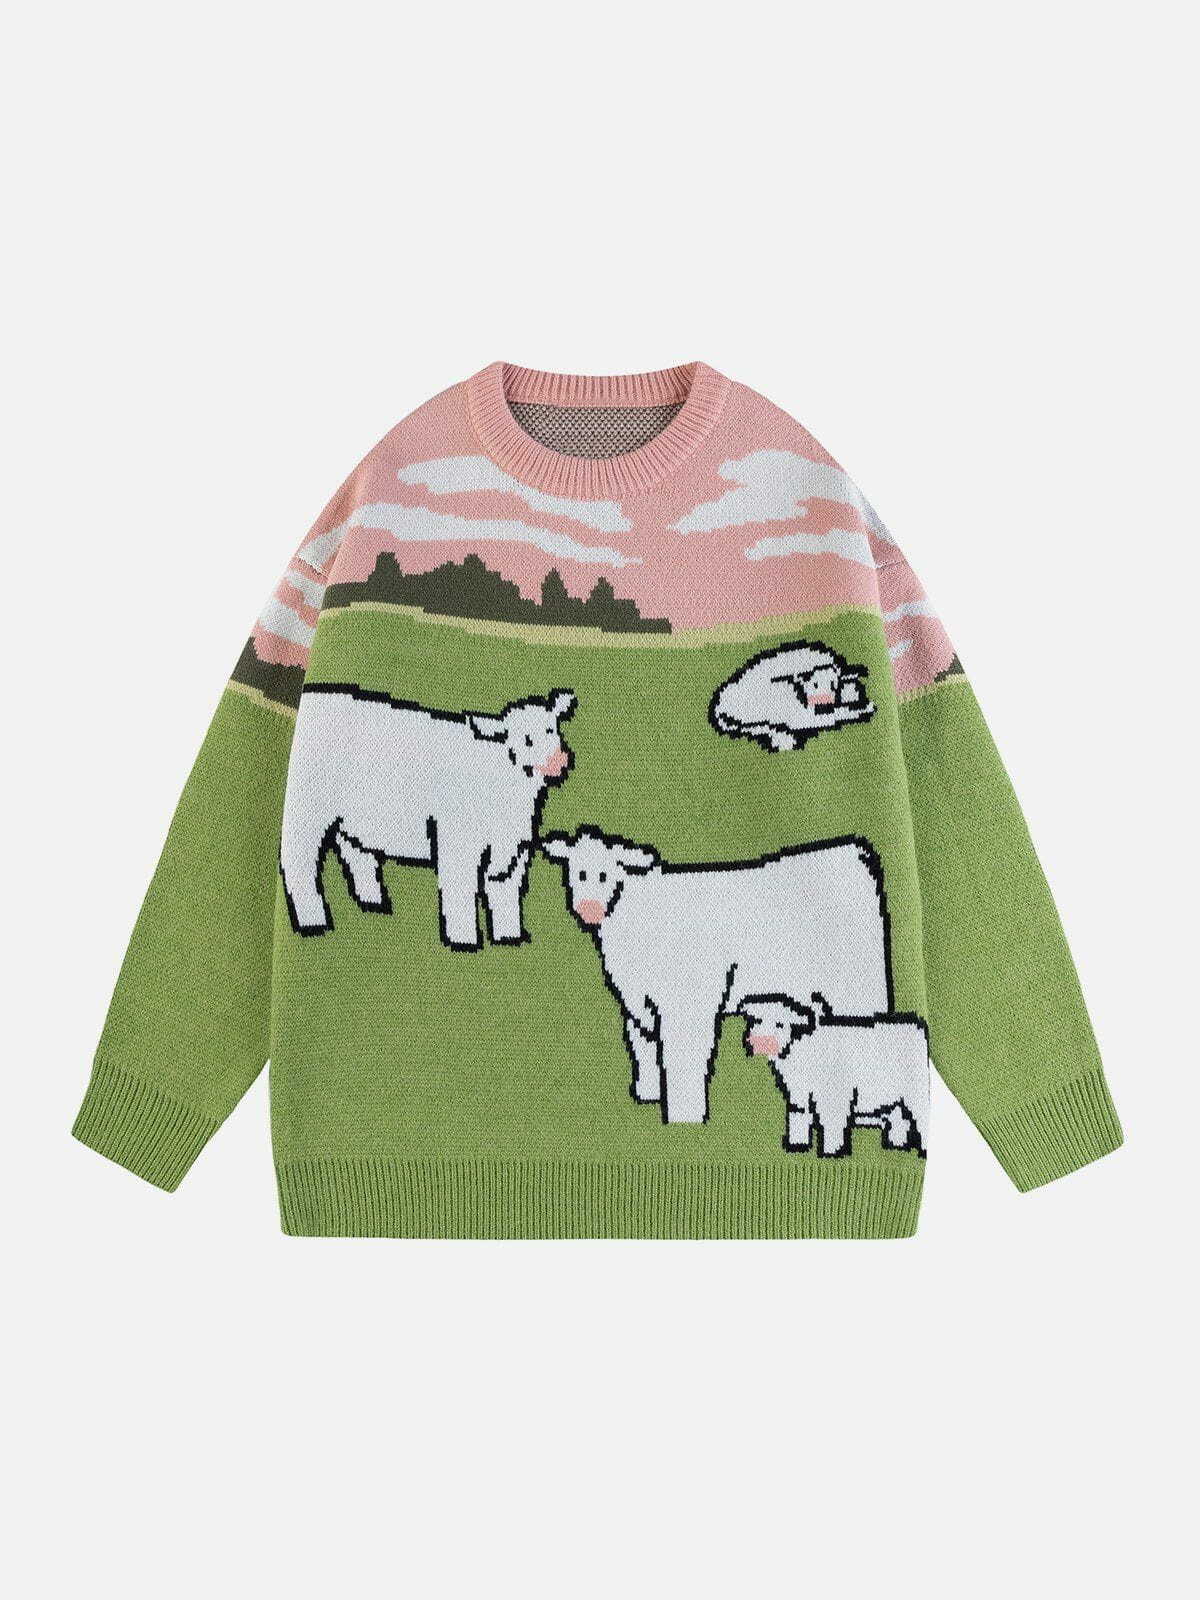 cow jacquard sweater colorblocked urban edge 6856